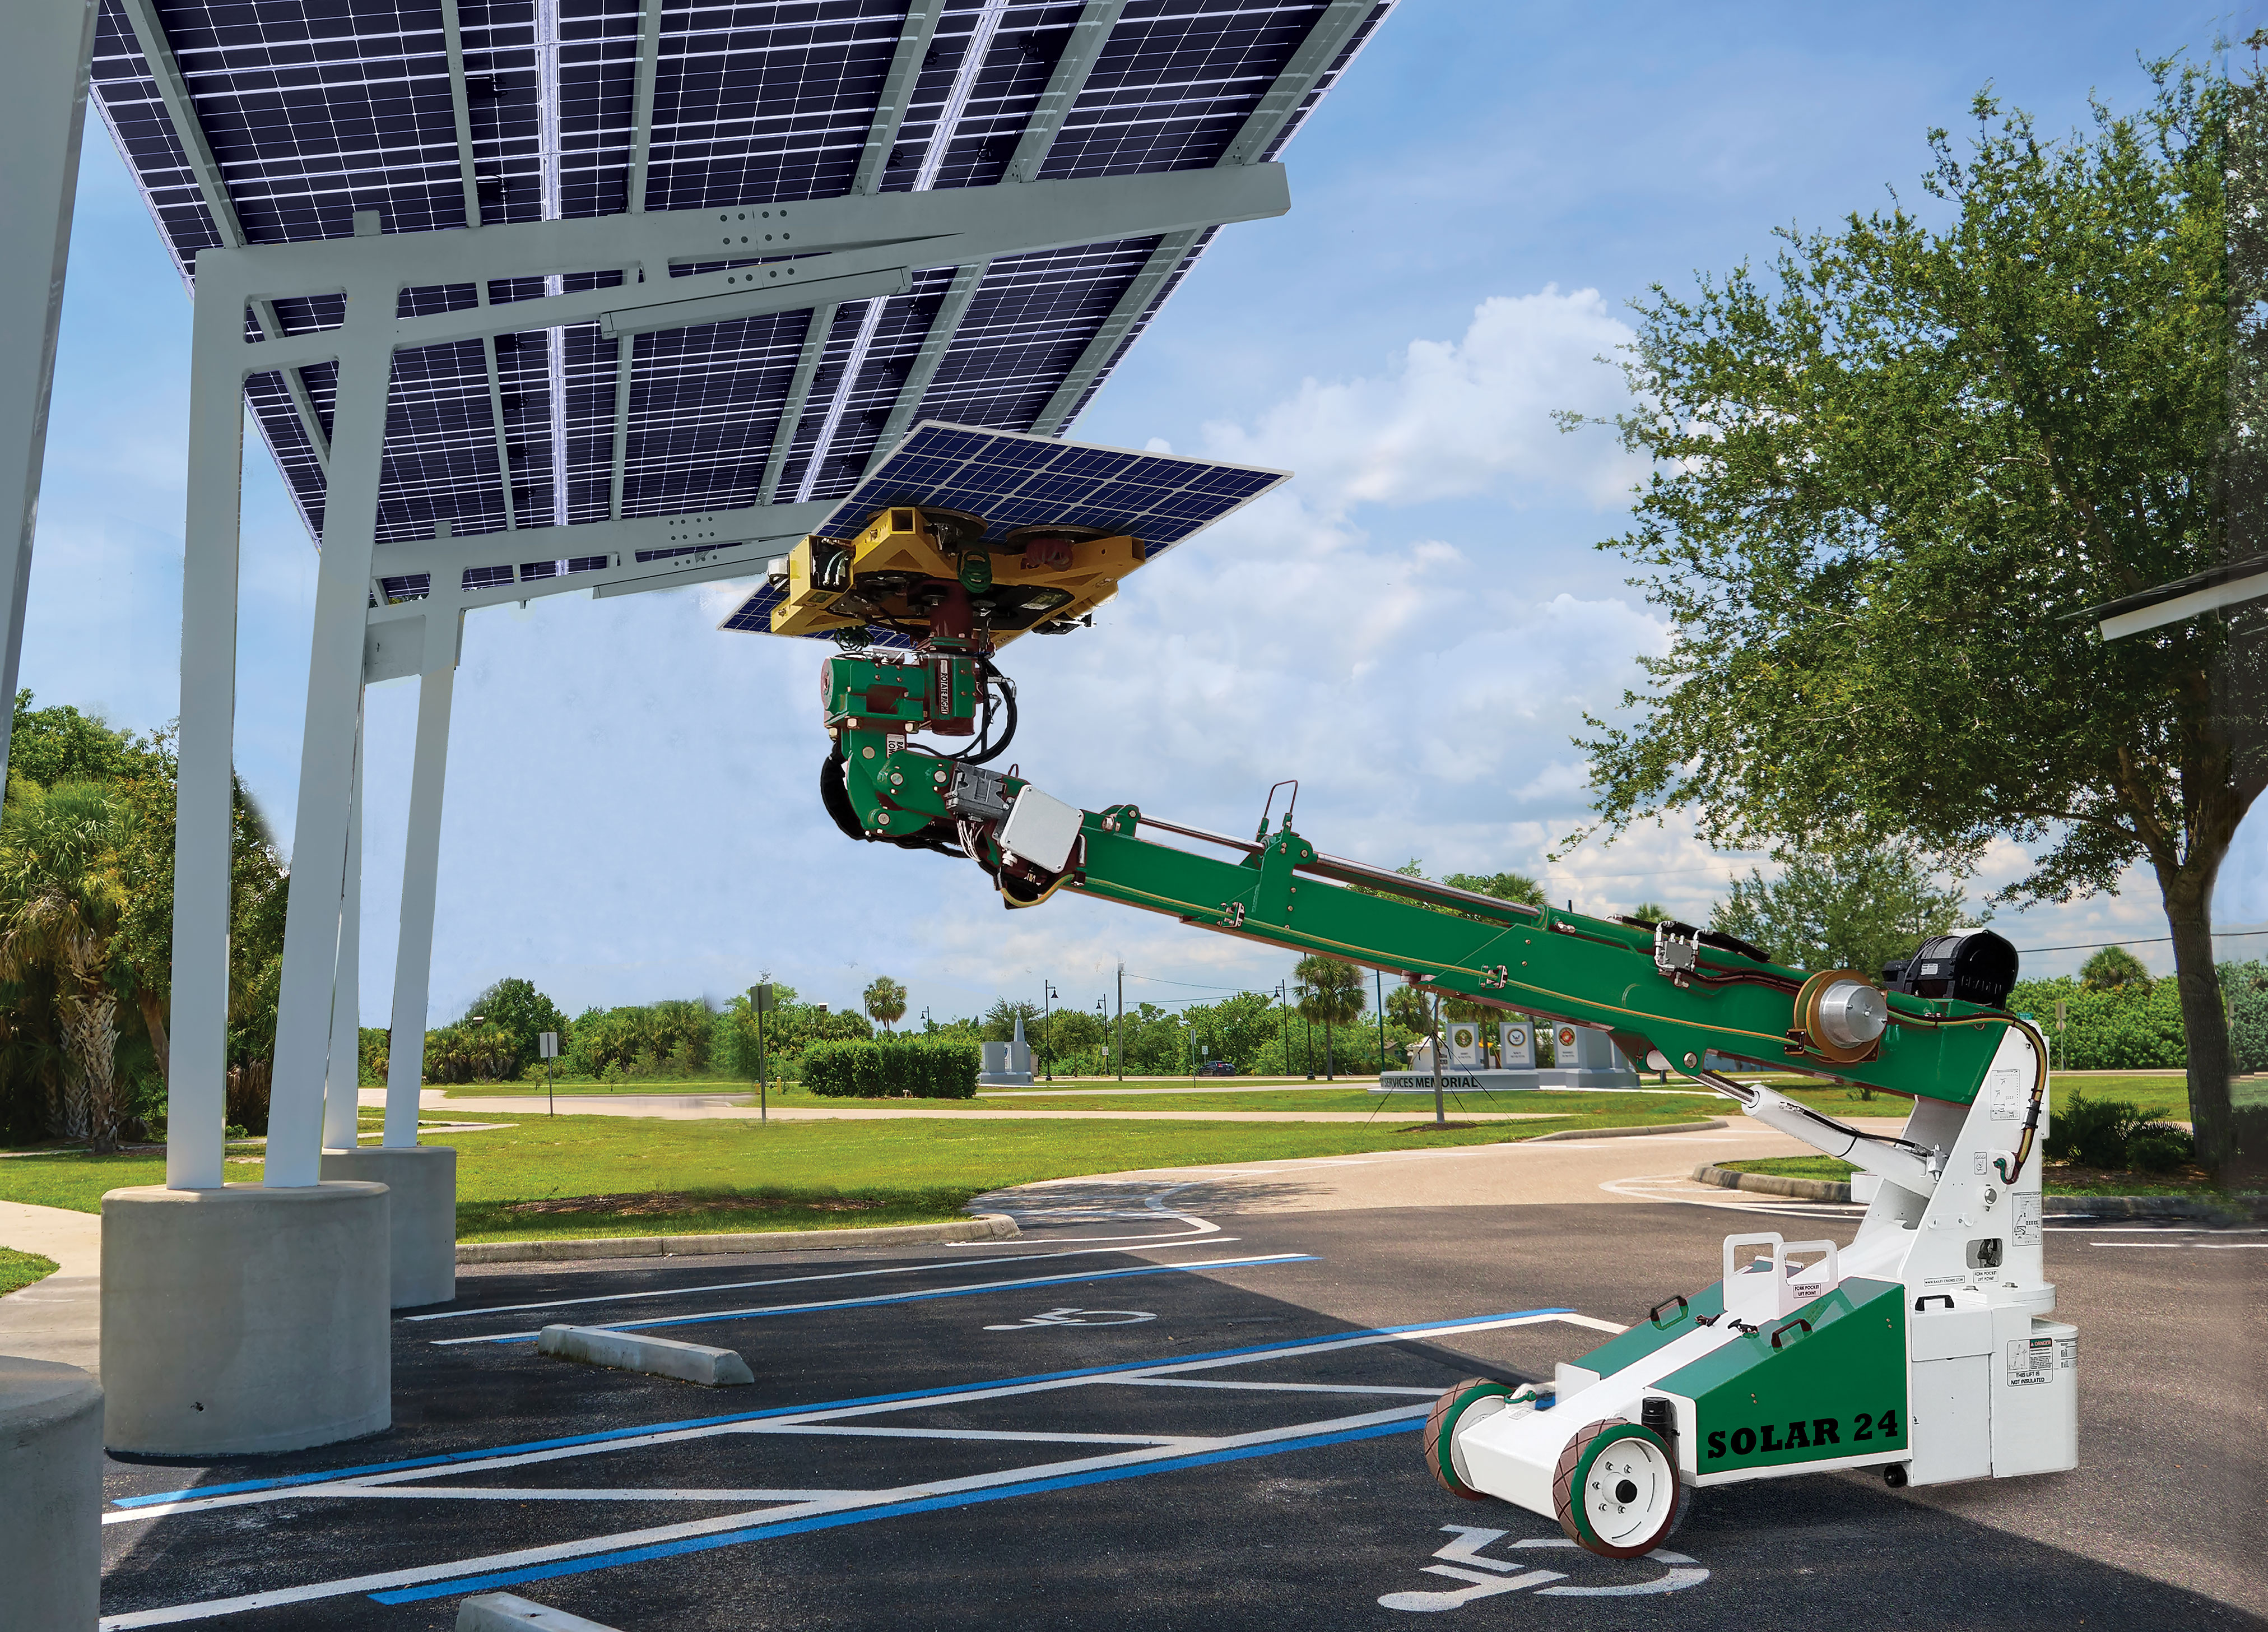 Solar 24 installing solar panels in a carport.